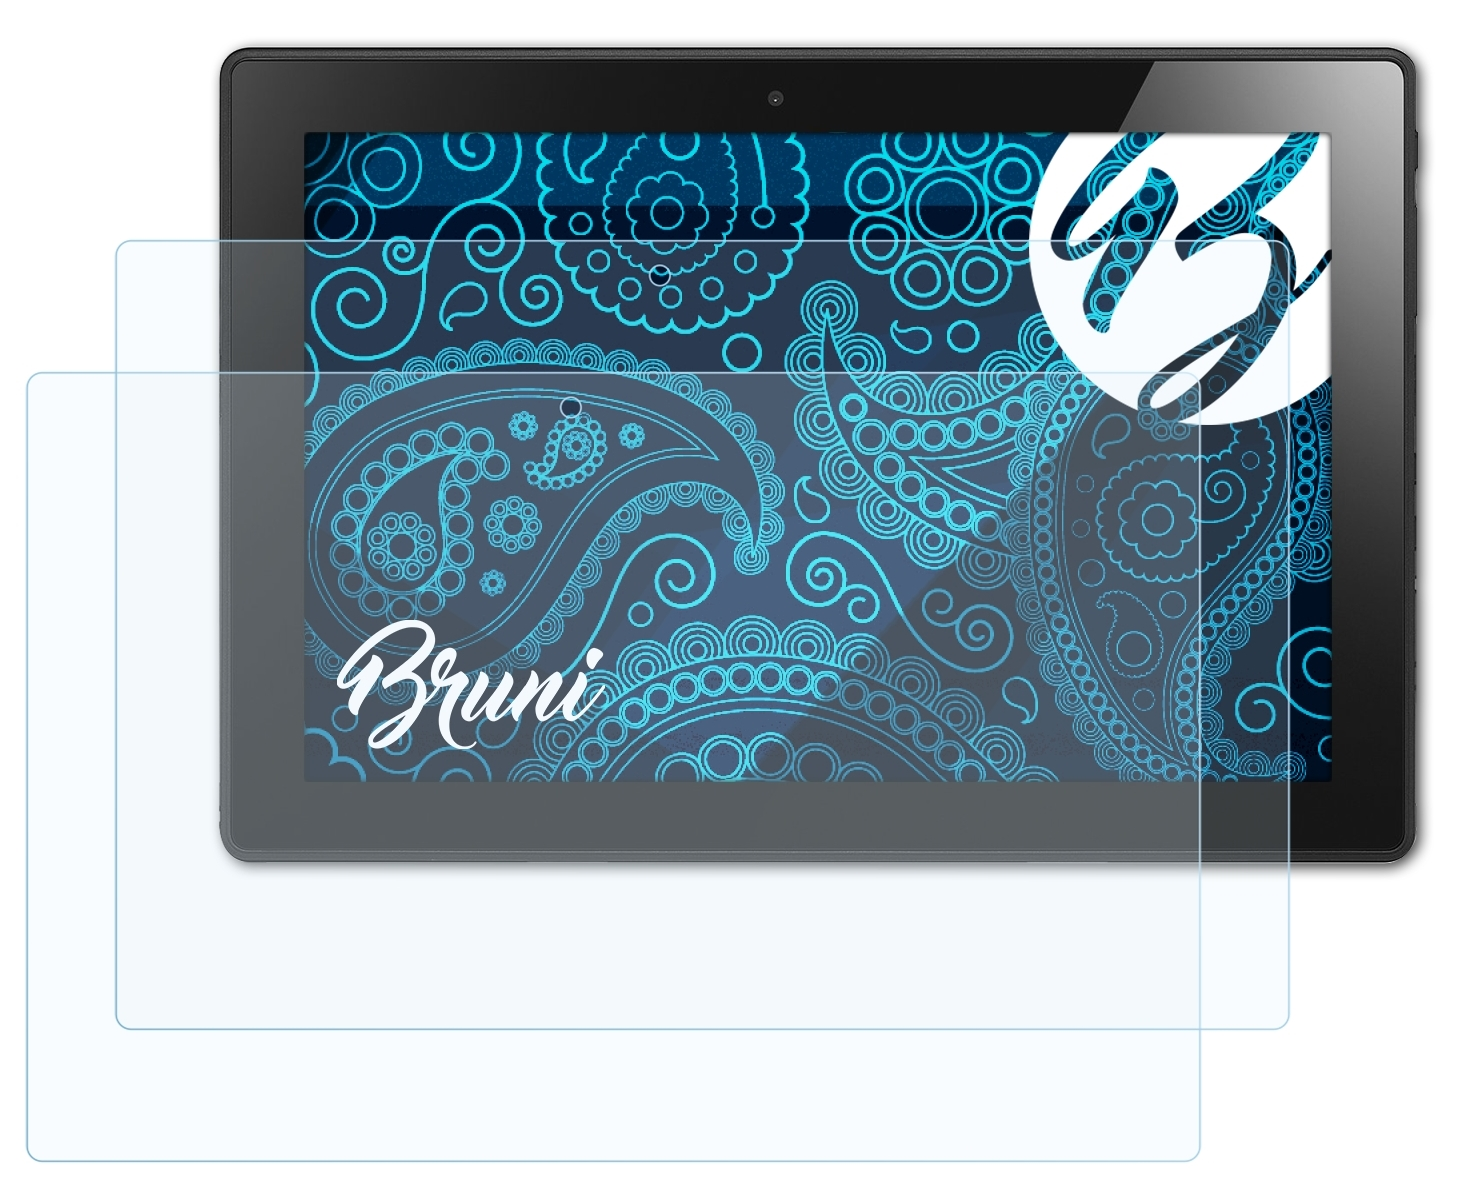 BRUNI 2x Basics-Clear Schutzfolie(für Miix Lenovo 310) IdeaPad